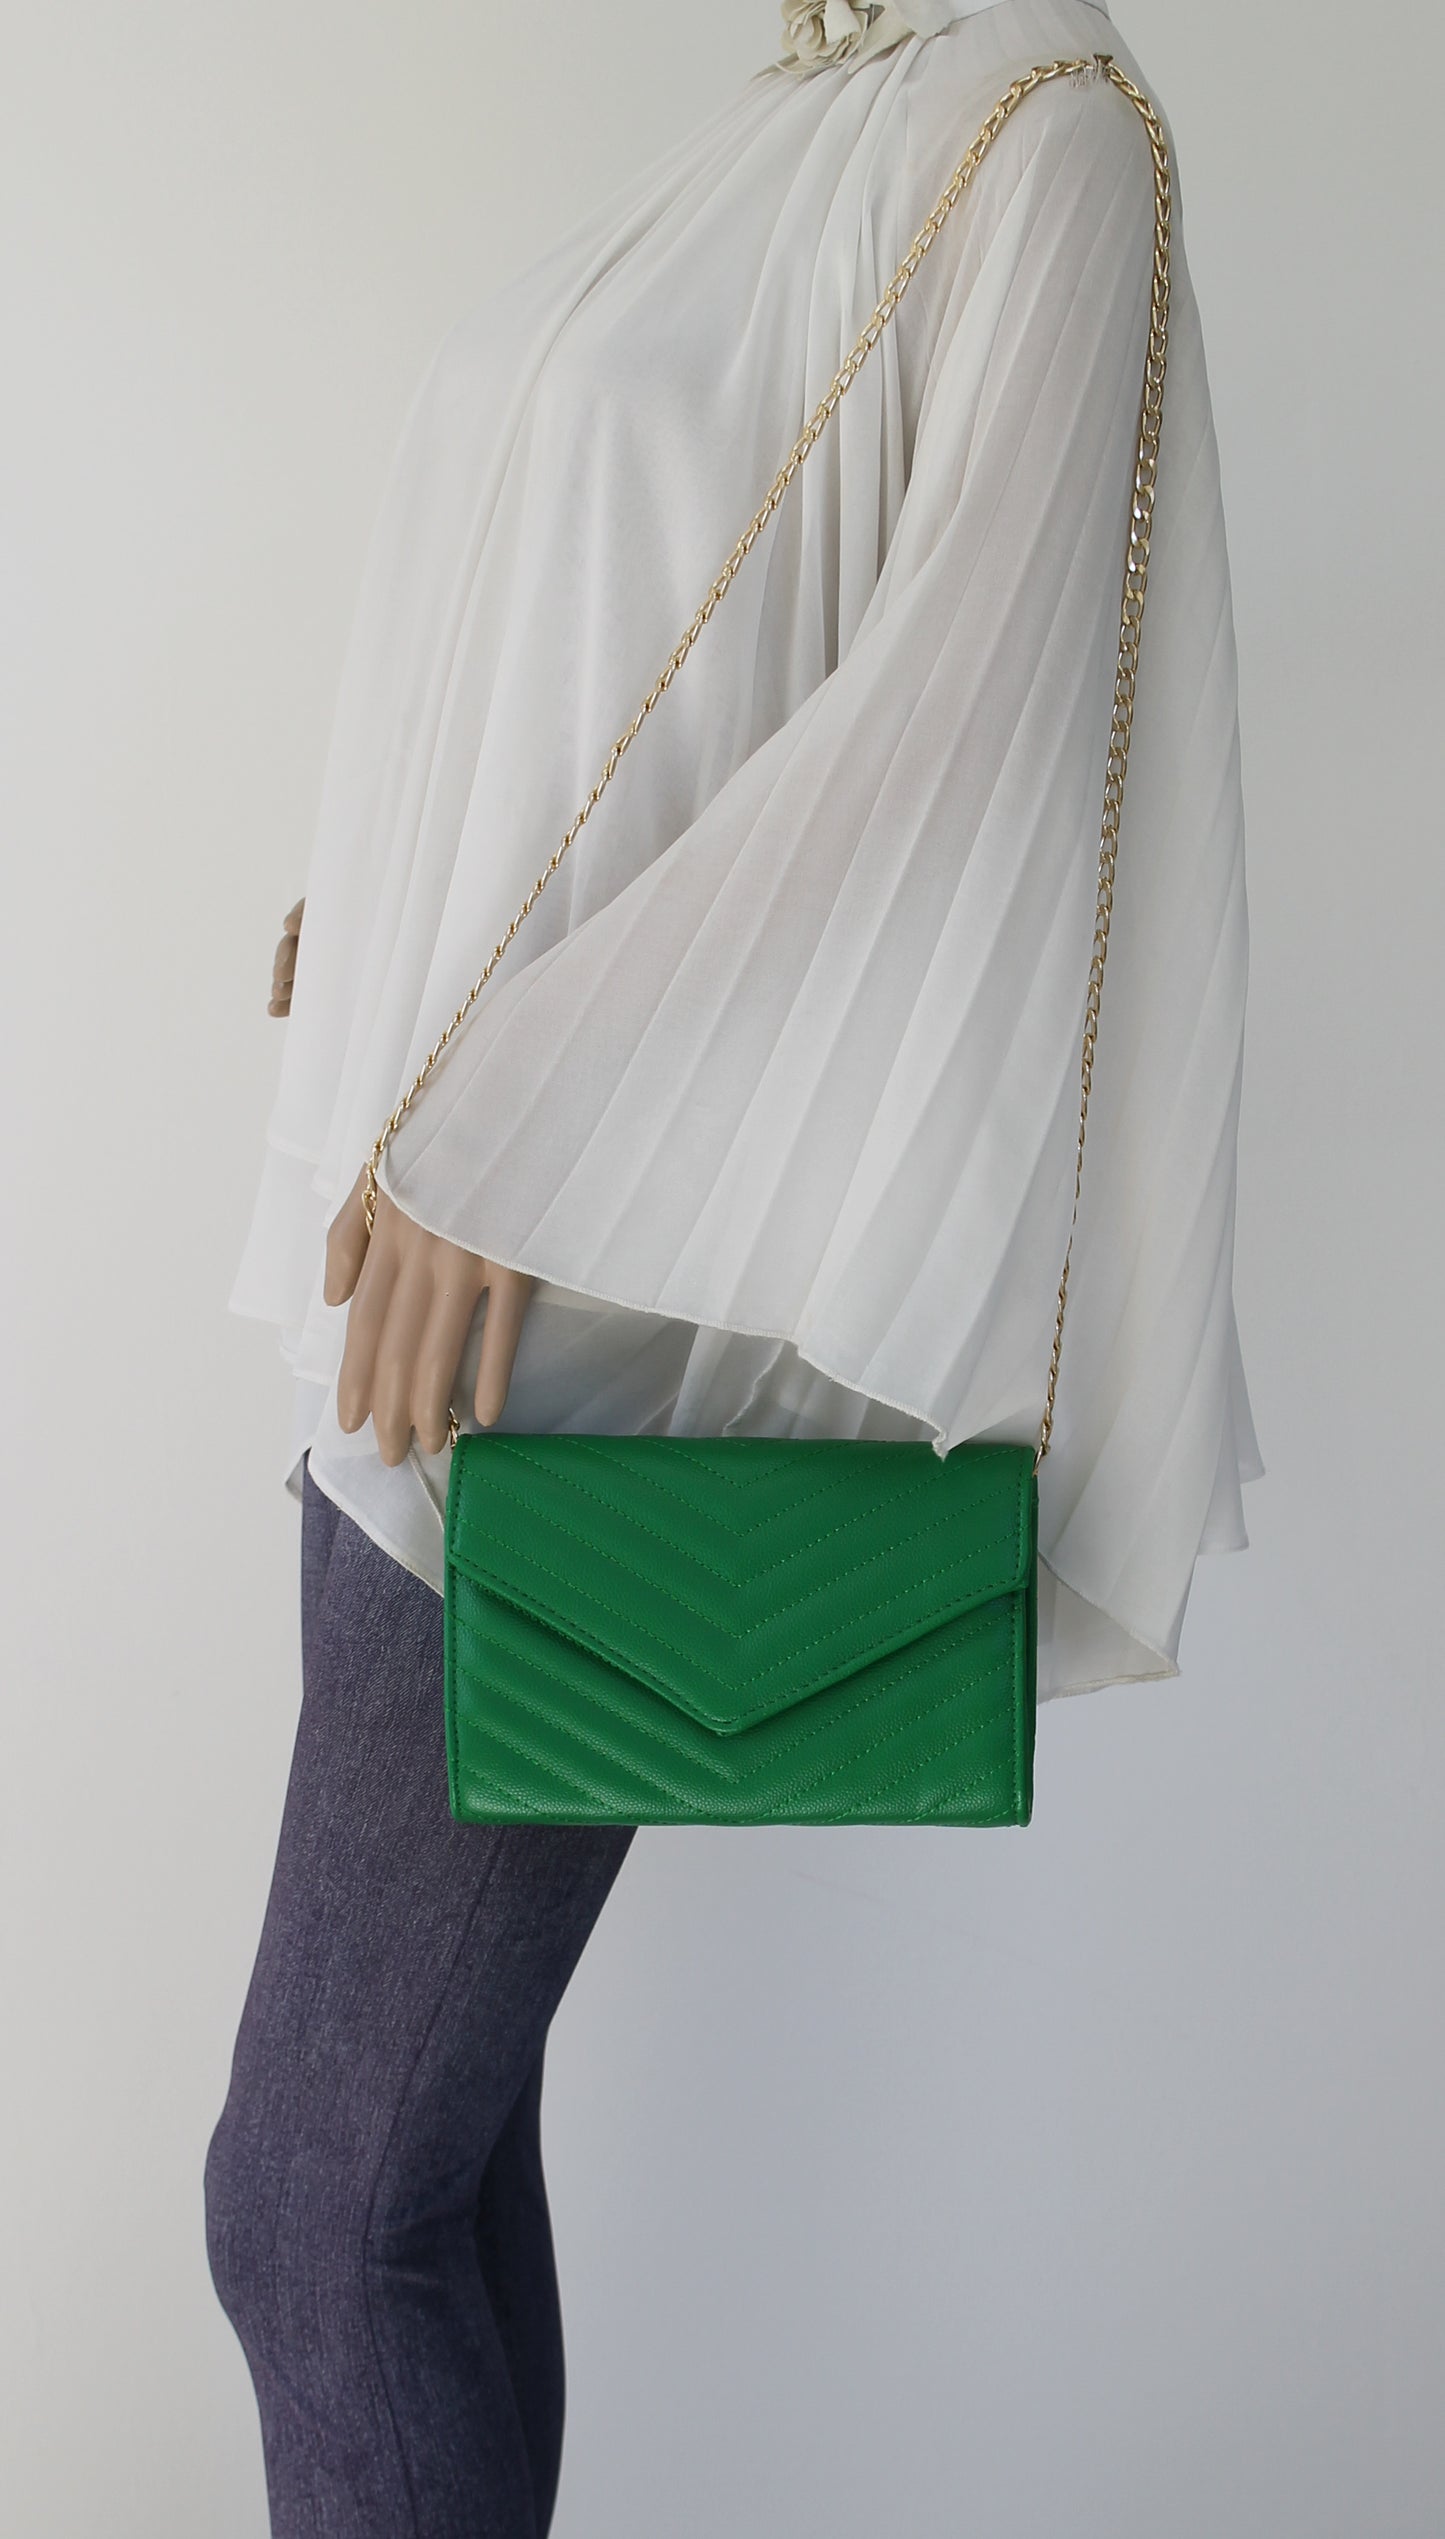 Jessa Faux Leather V shape Clutch Bag Green